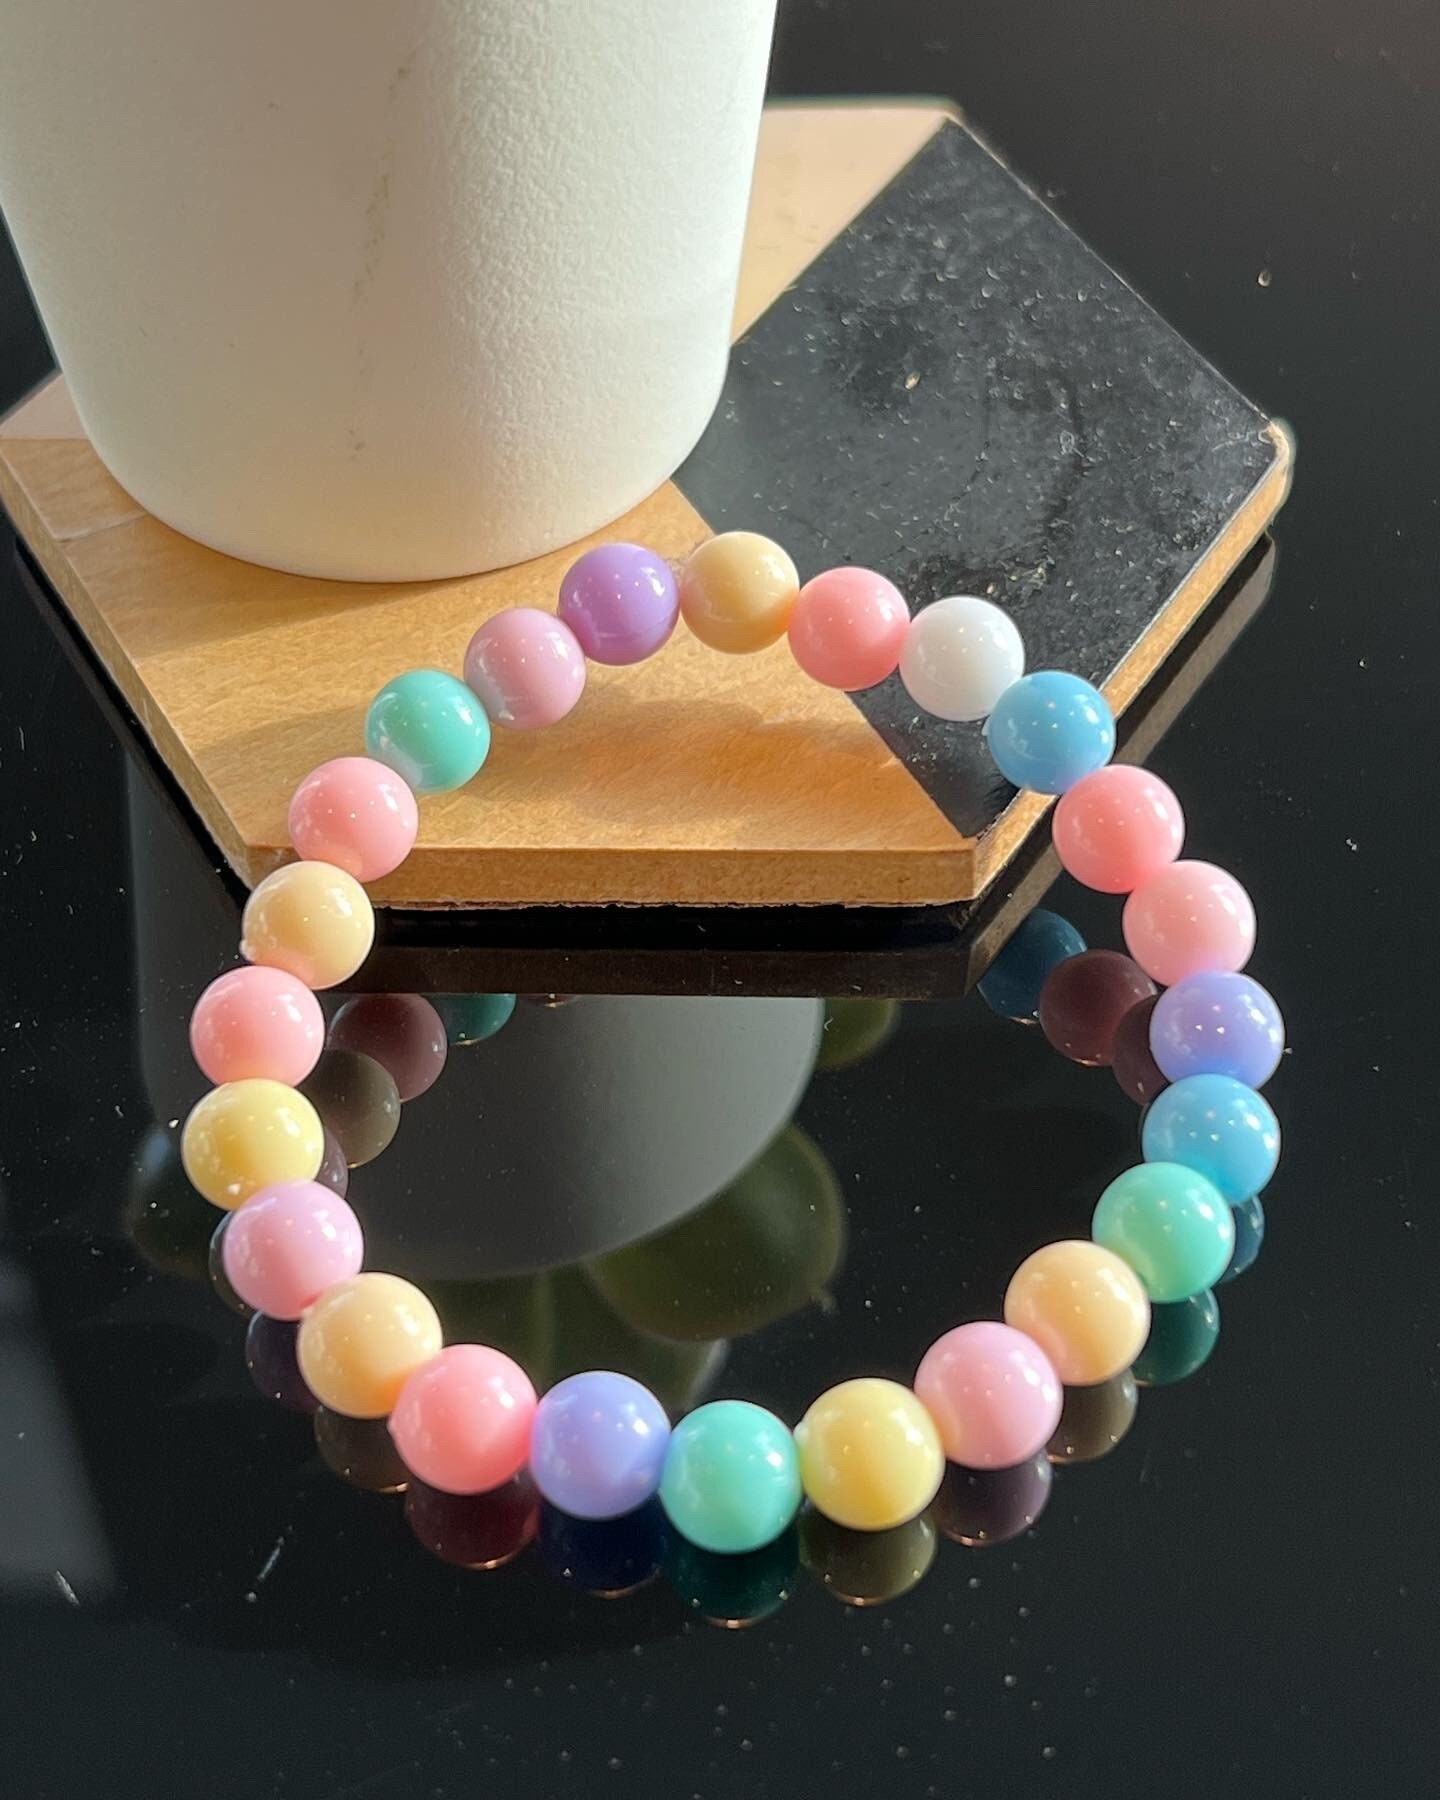 Emilia Rainbow Beaded Bracelet